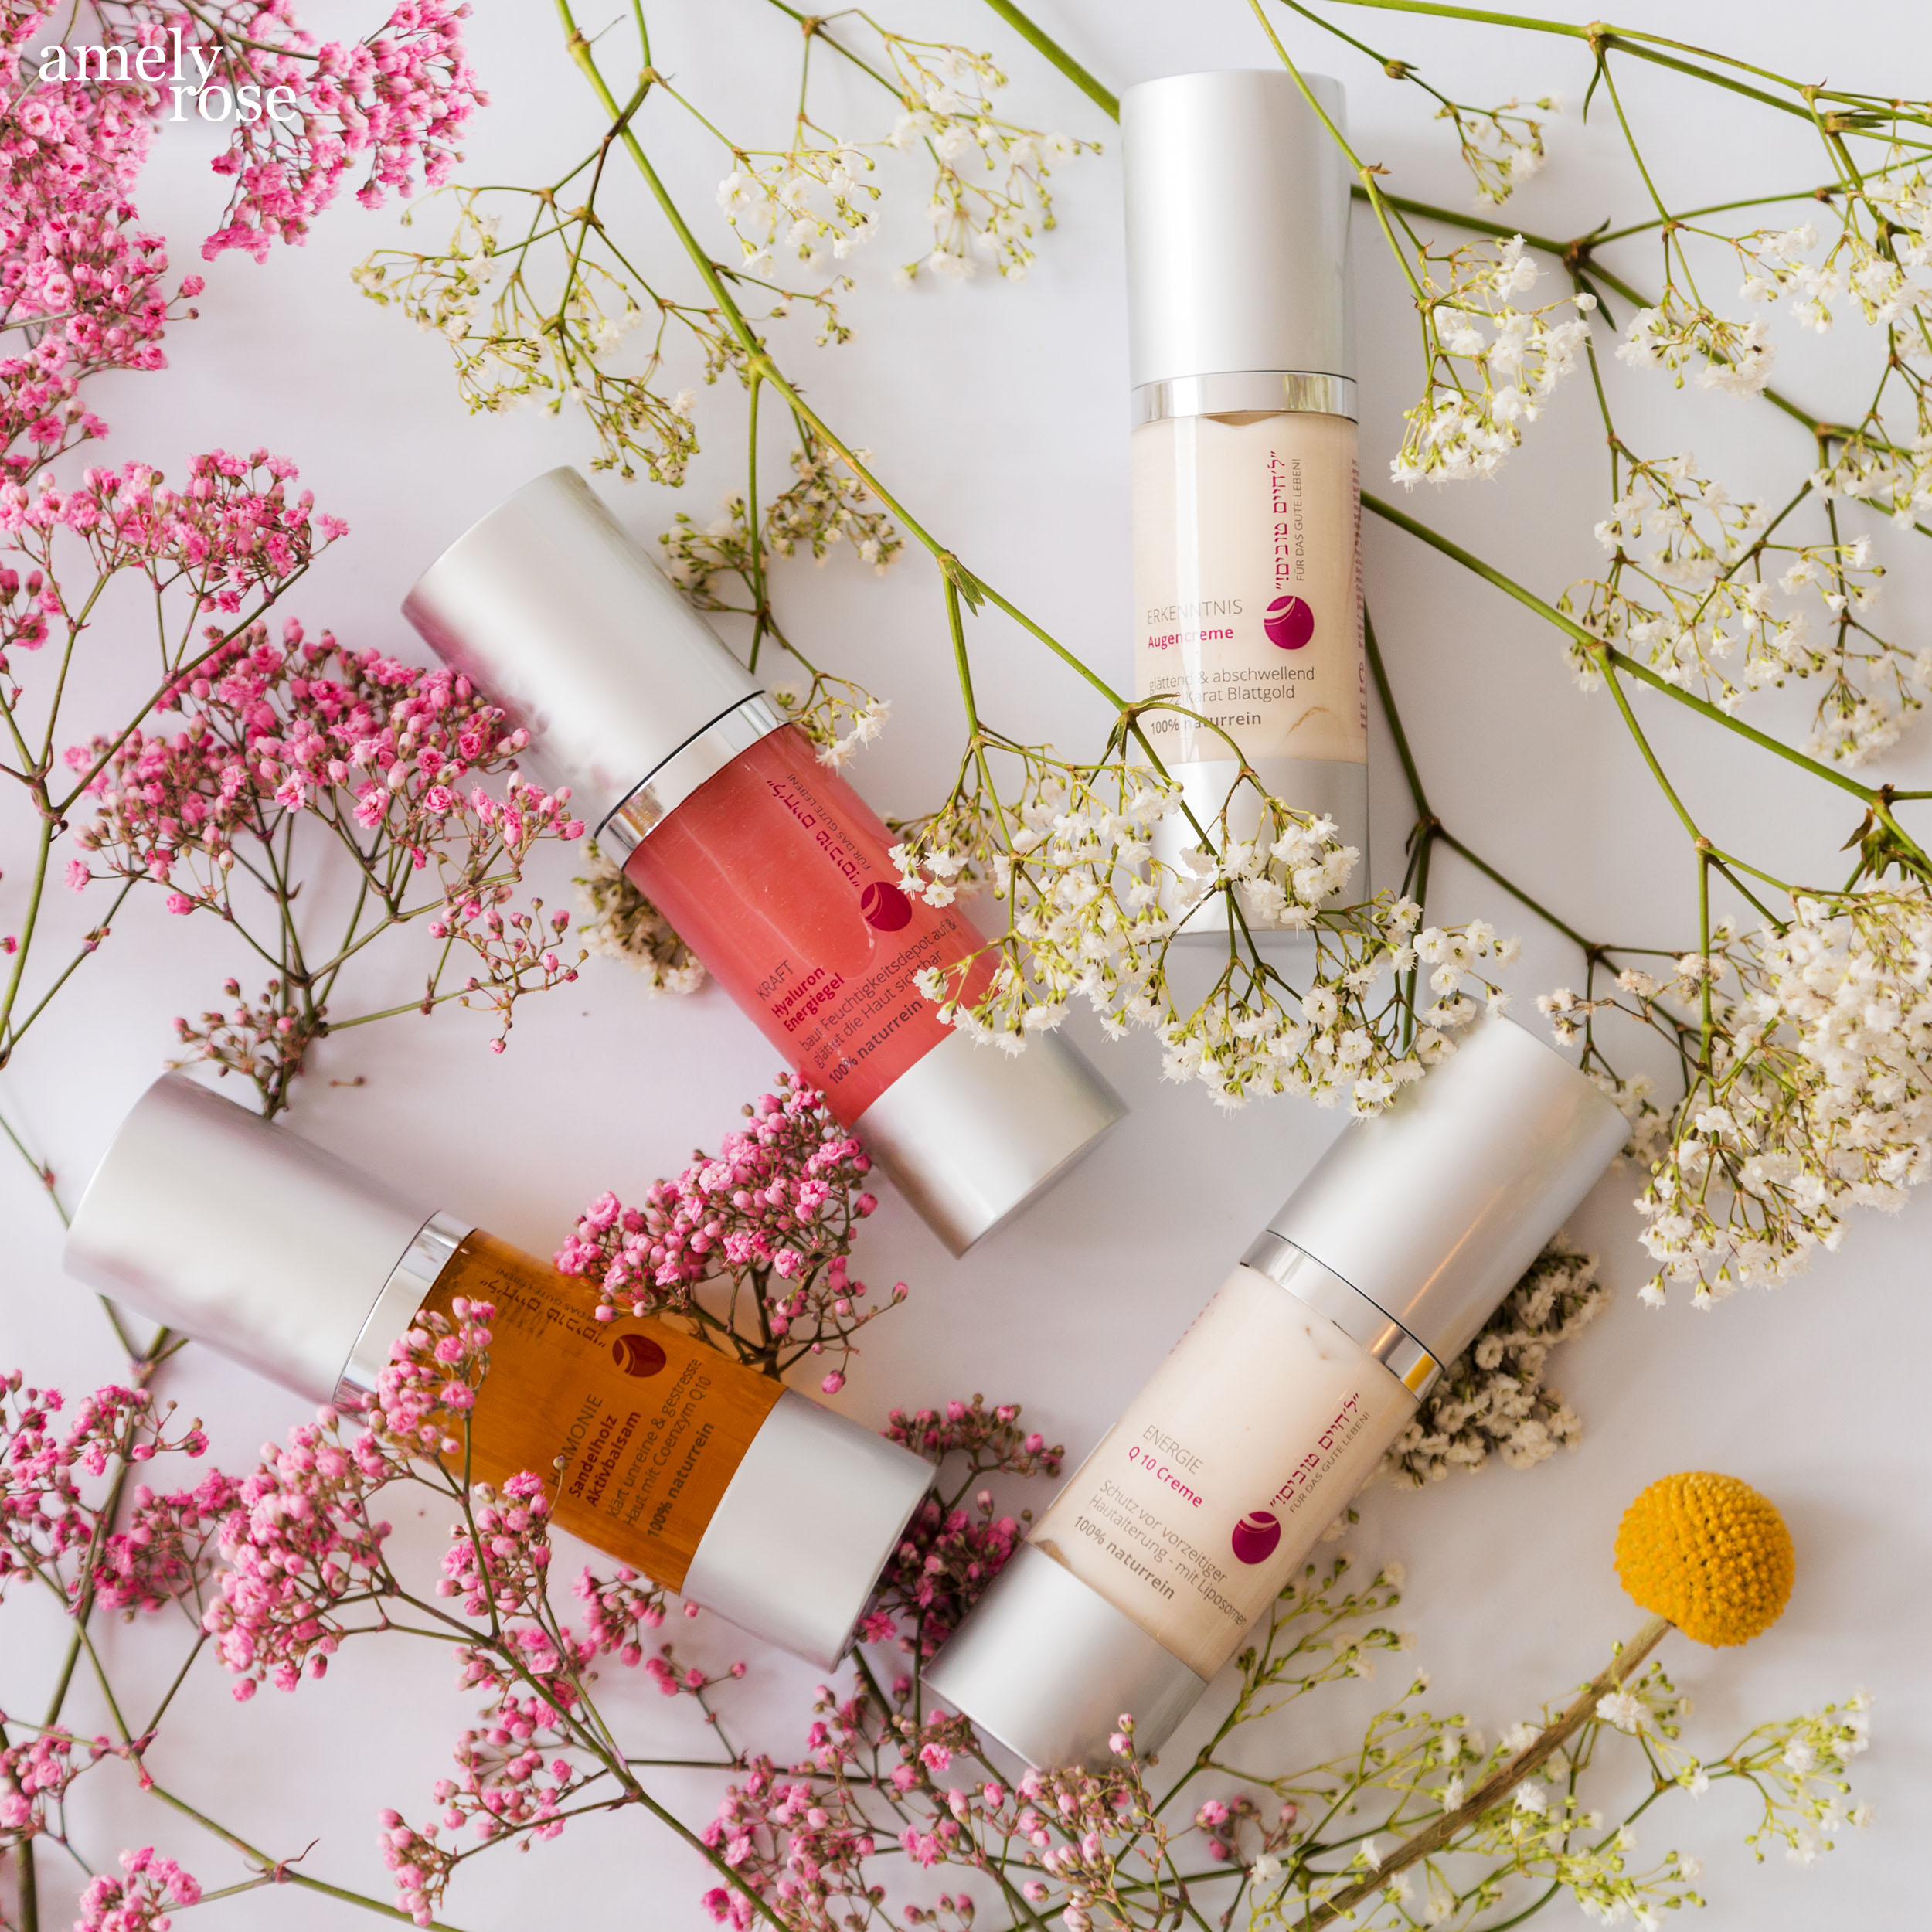 Amely Rose Naturkosmetik Beauty Produkte Guide Gesichtspflege Fuer das Gute Leben